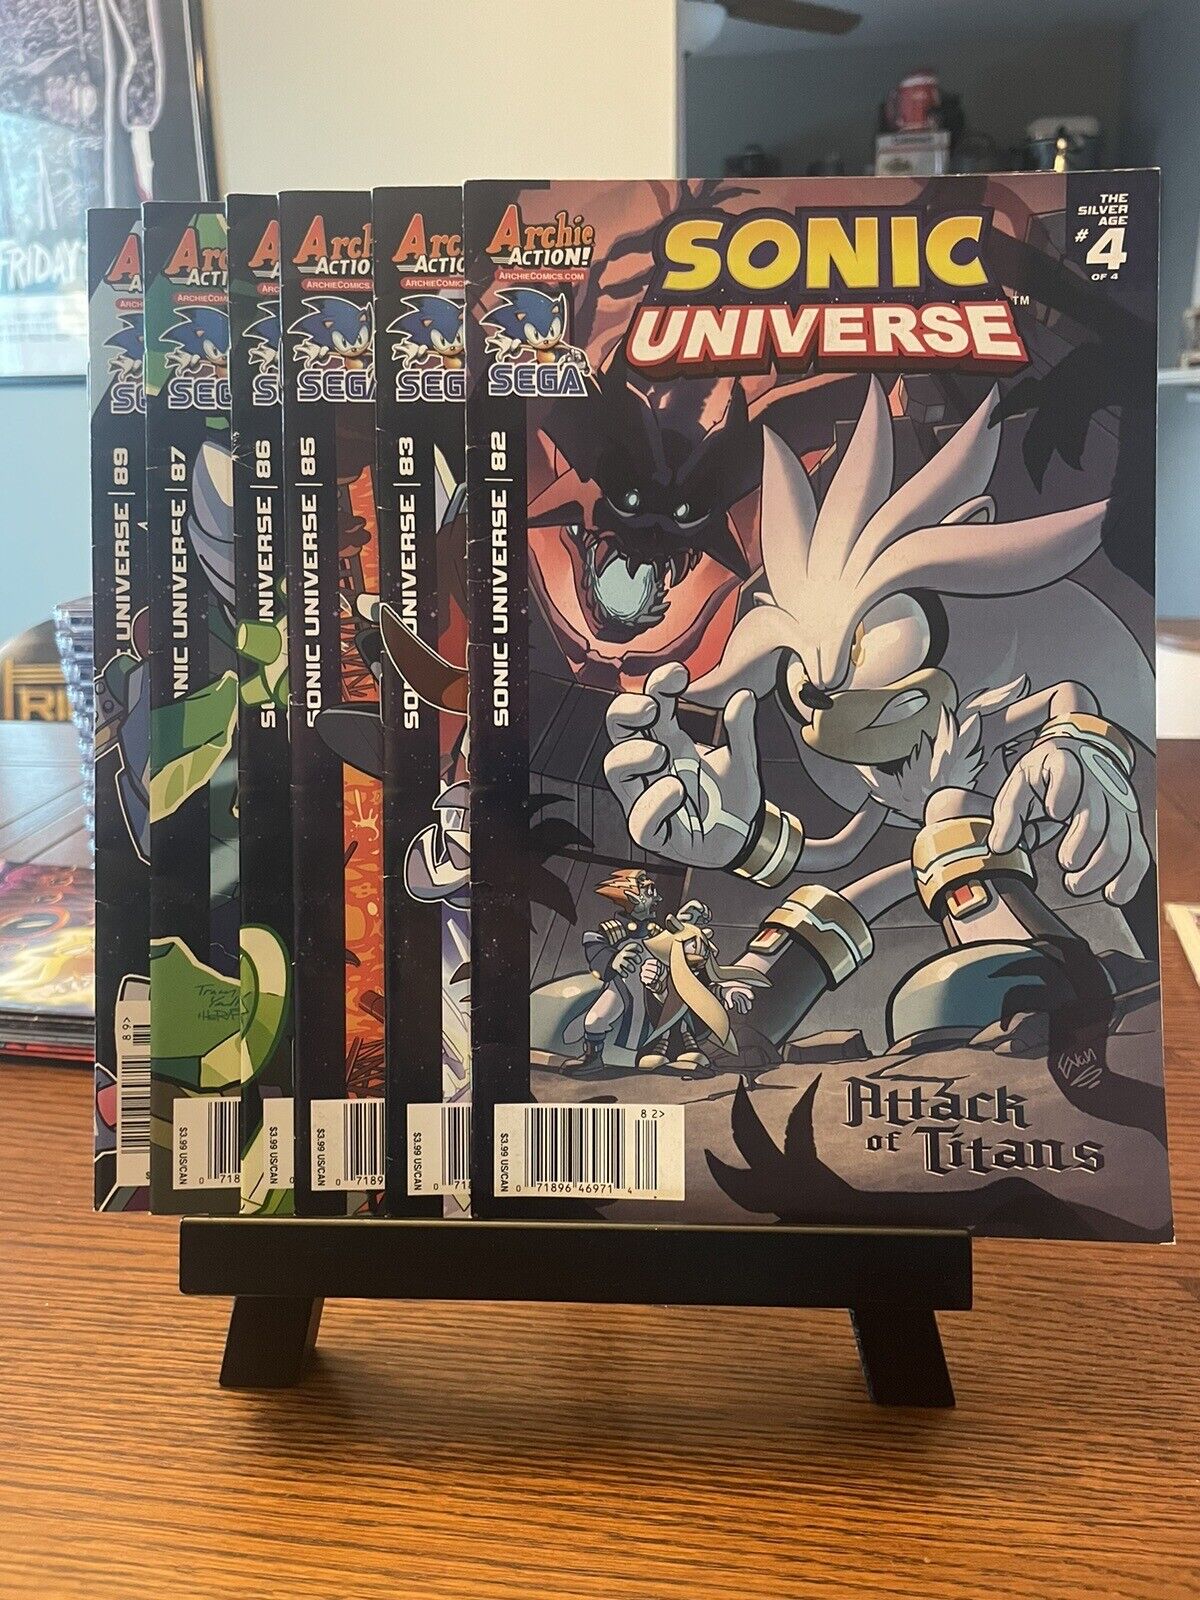 Sonic Universe 6 Issue run 2016, Archie) print run #82-89 Minus #84 & 88